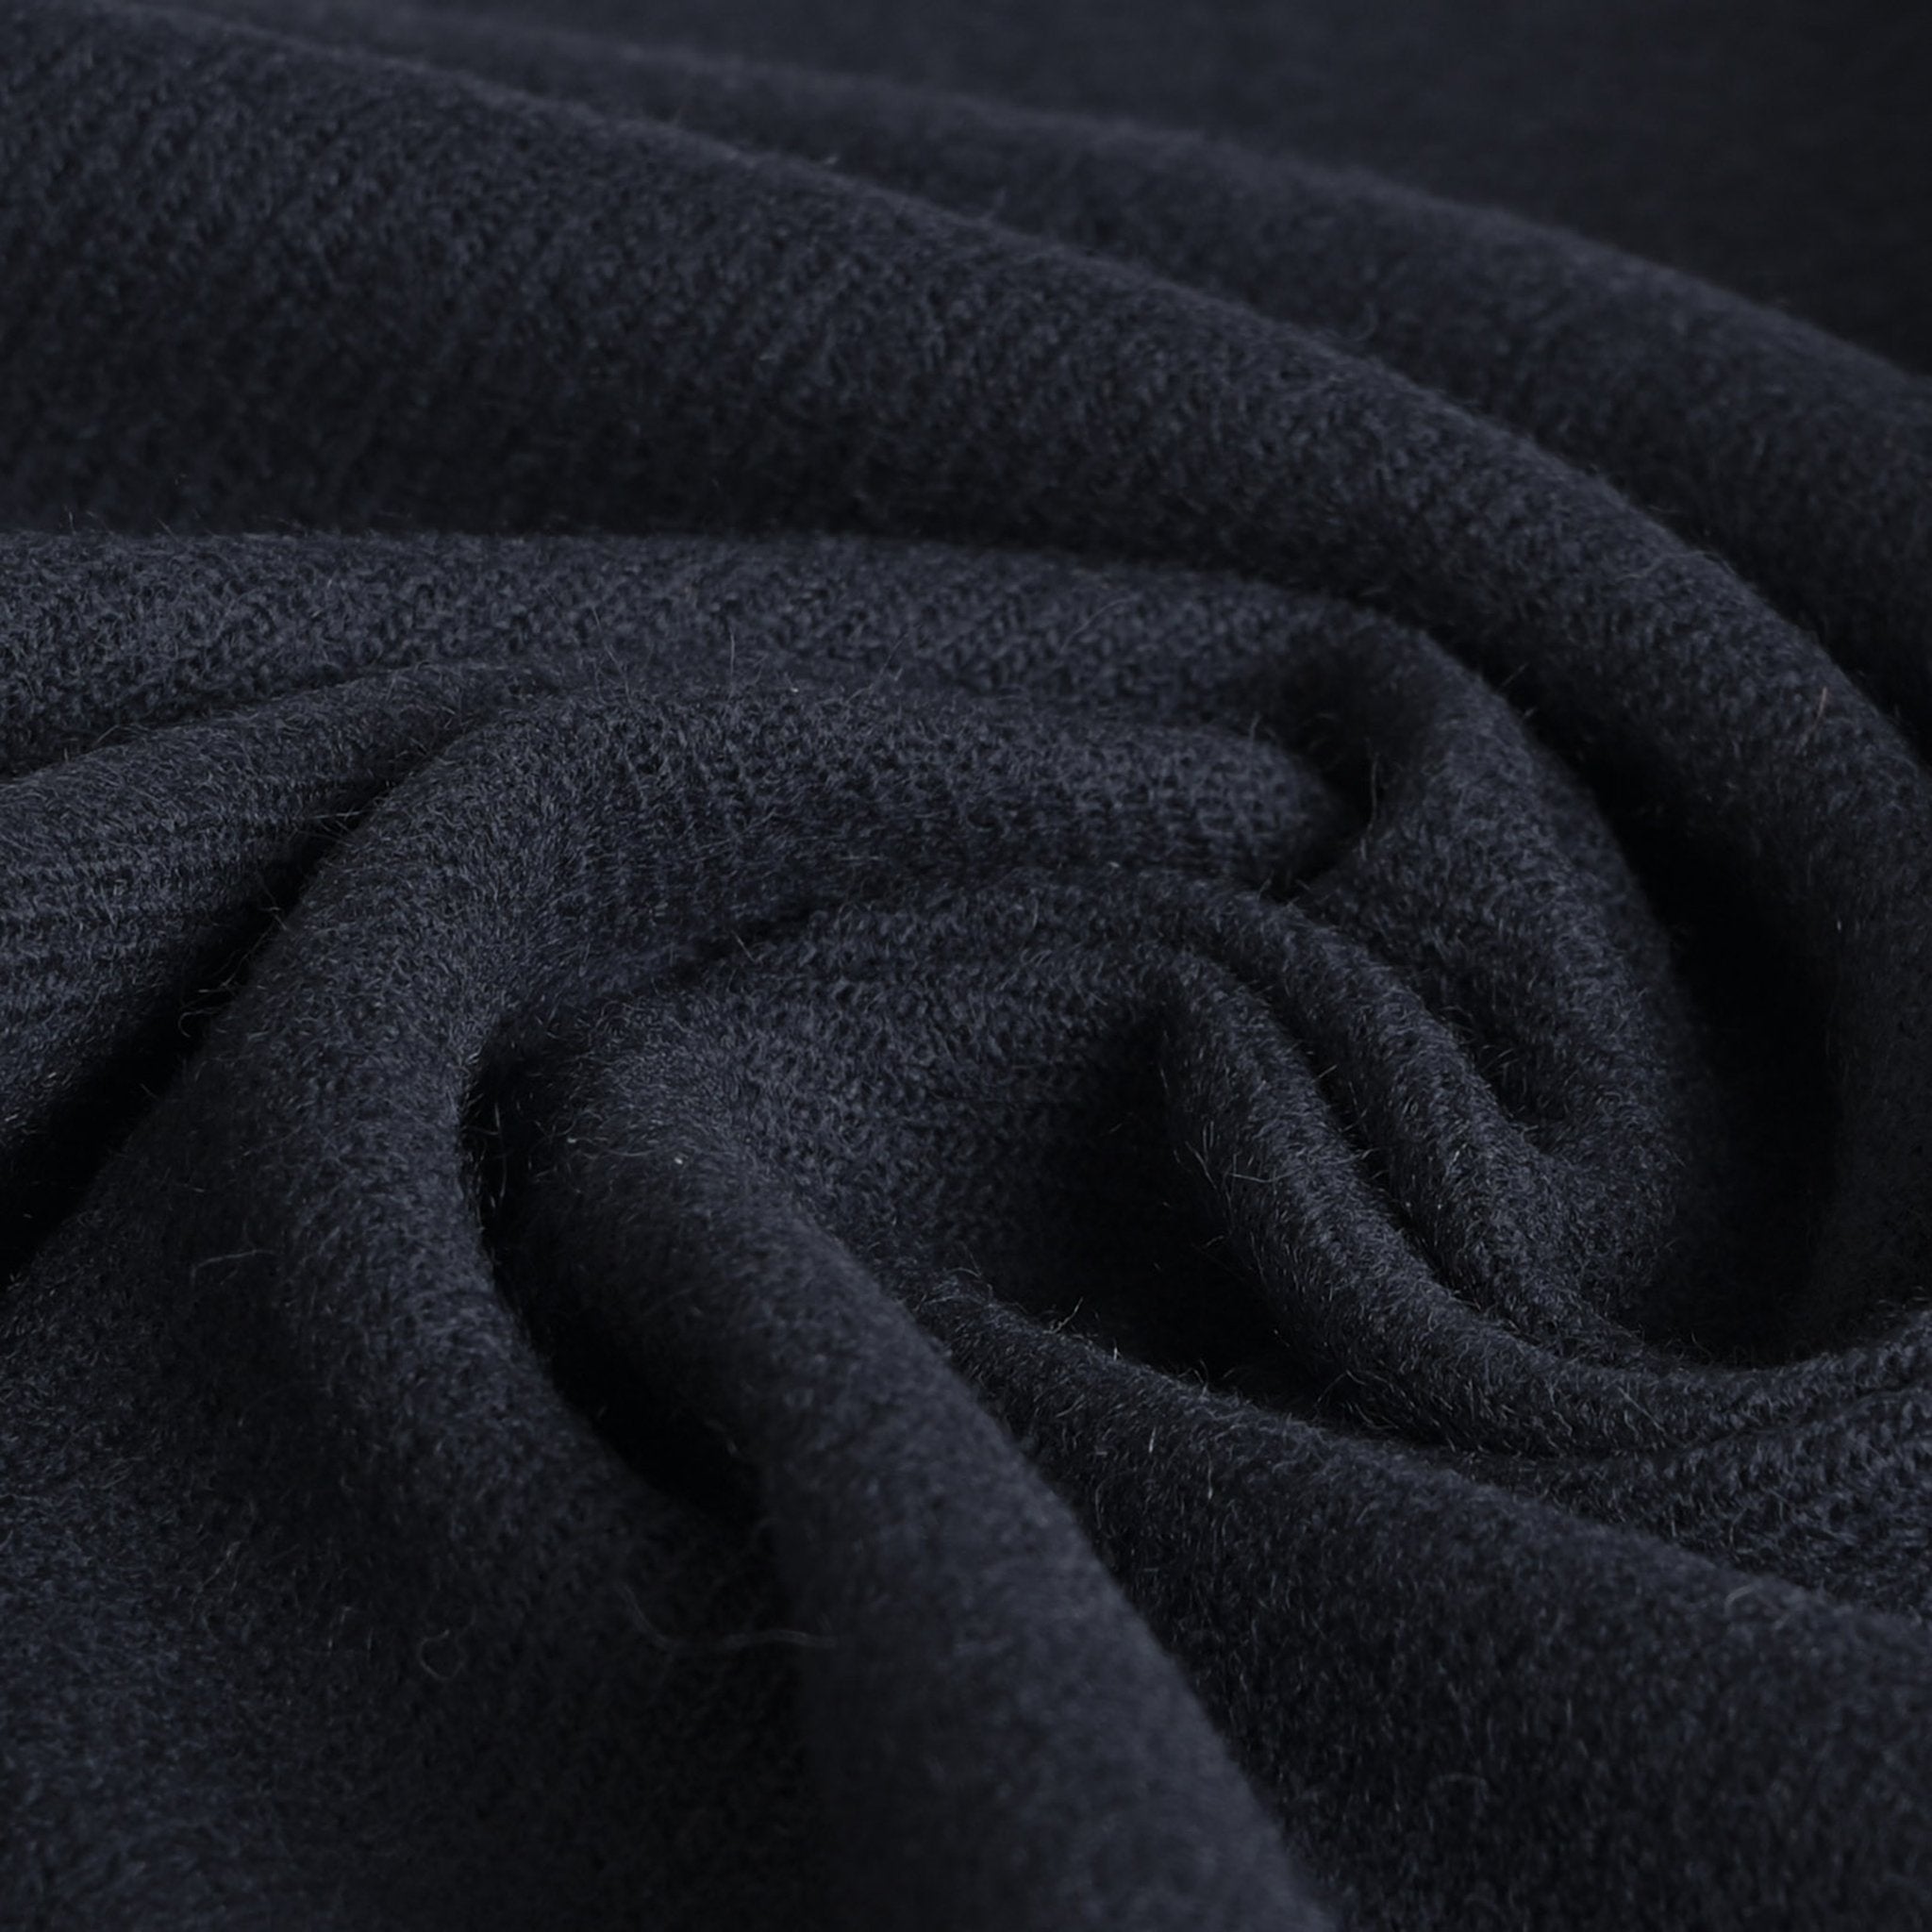 Midnight Suiting Twill Fabric 2592